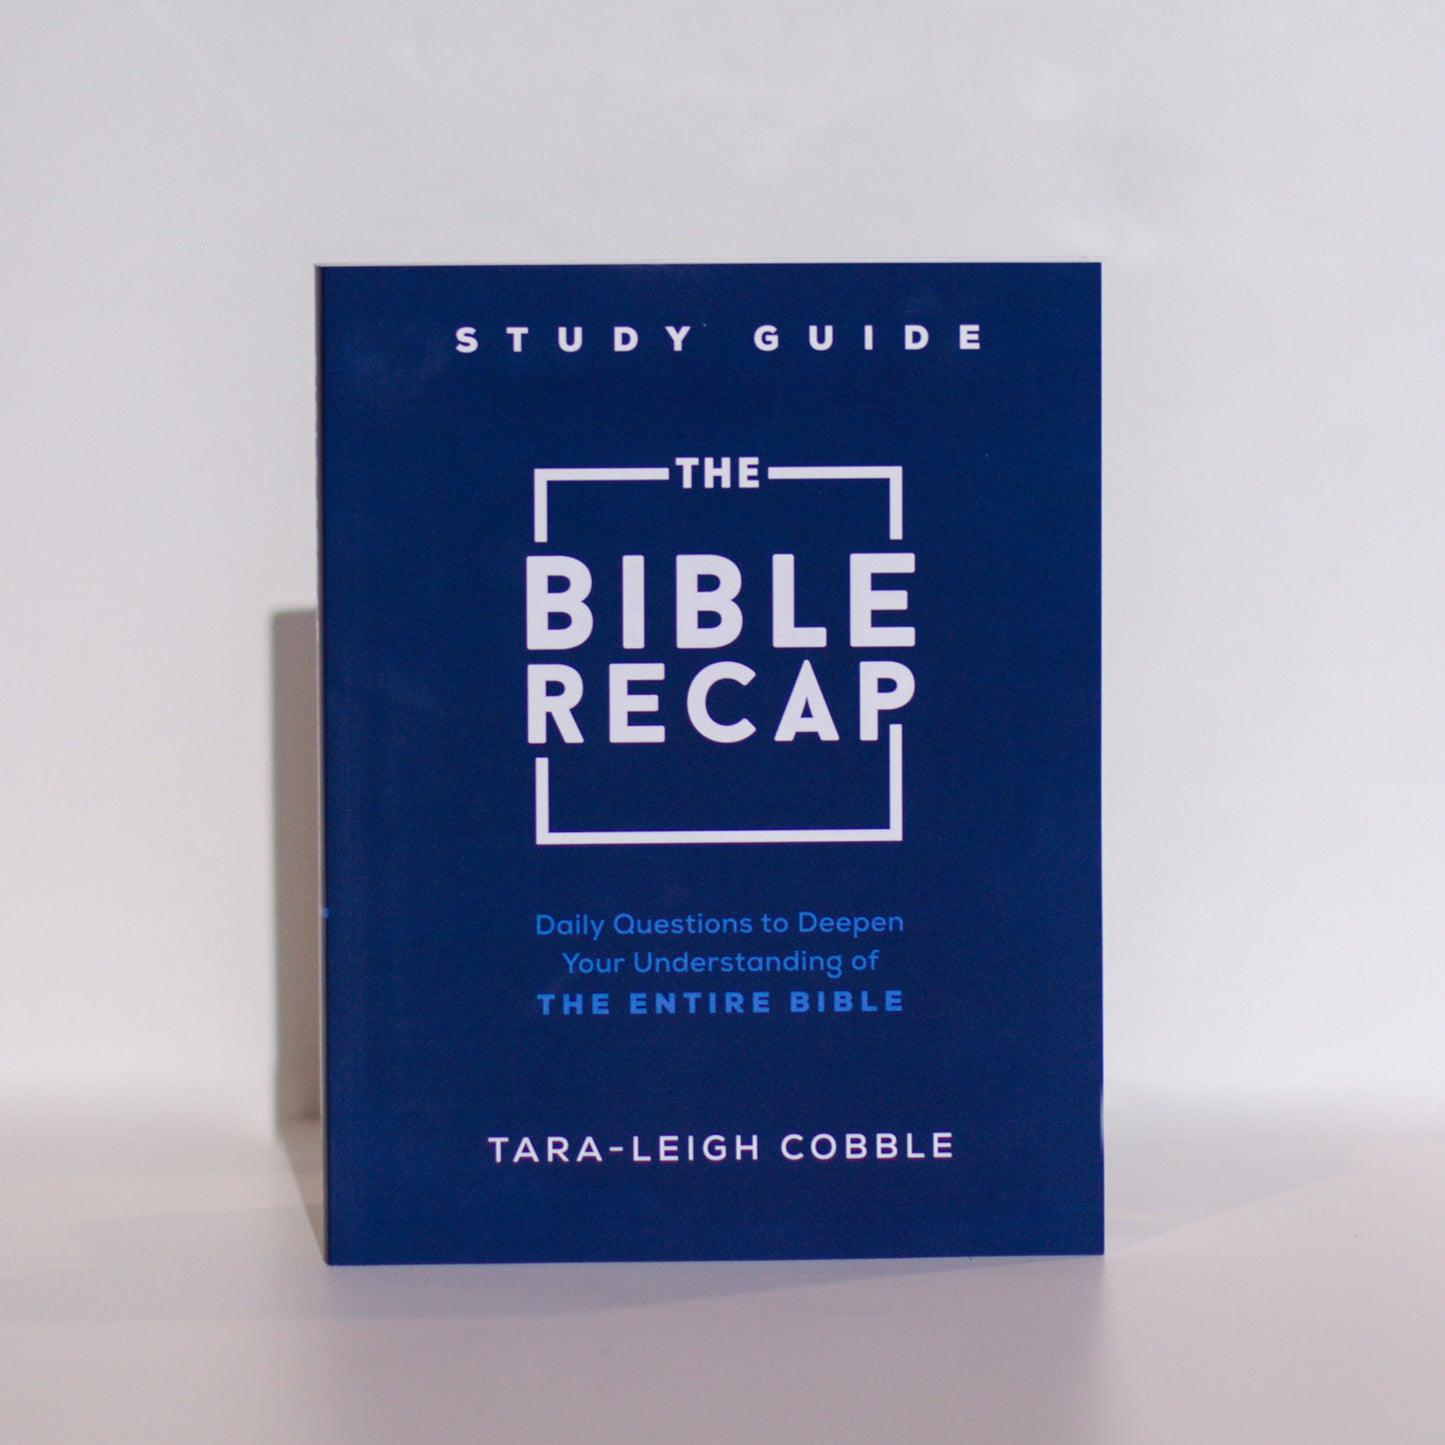 The Bible Recap: Study Guide